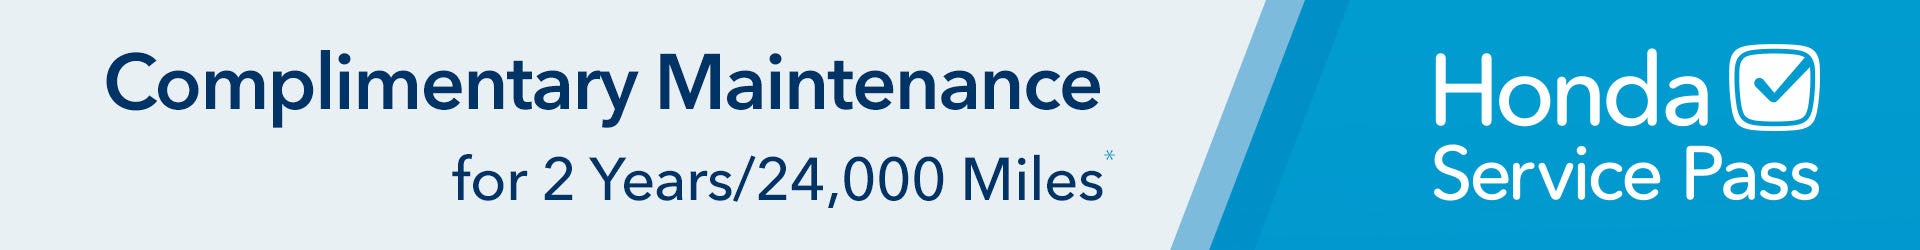 Complimentary Maintenance for 2 years / 24,000 Miles Honda Service Pass | Joyce Honda in Denville NJ